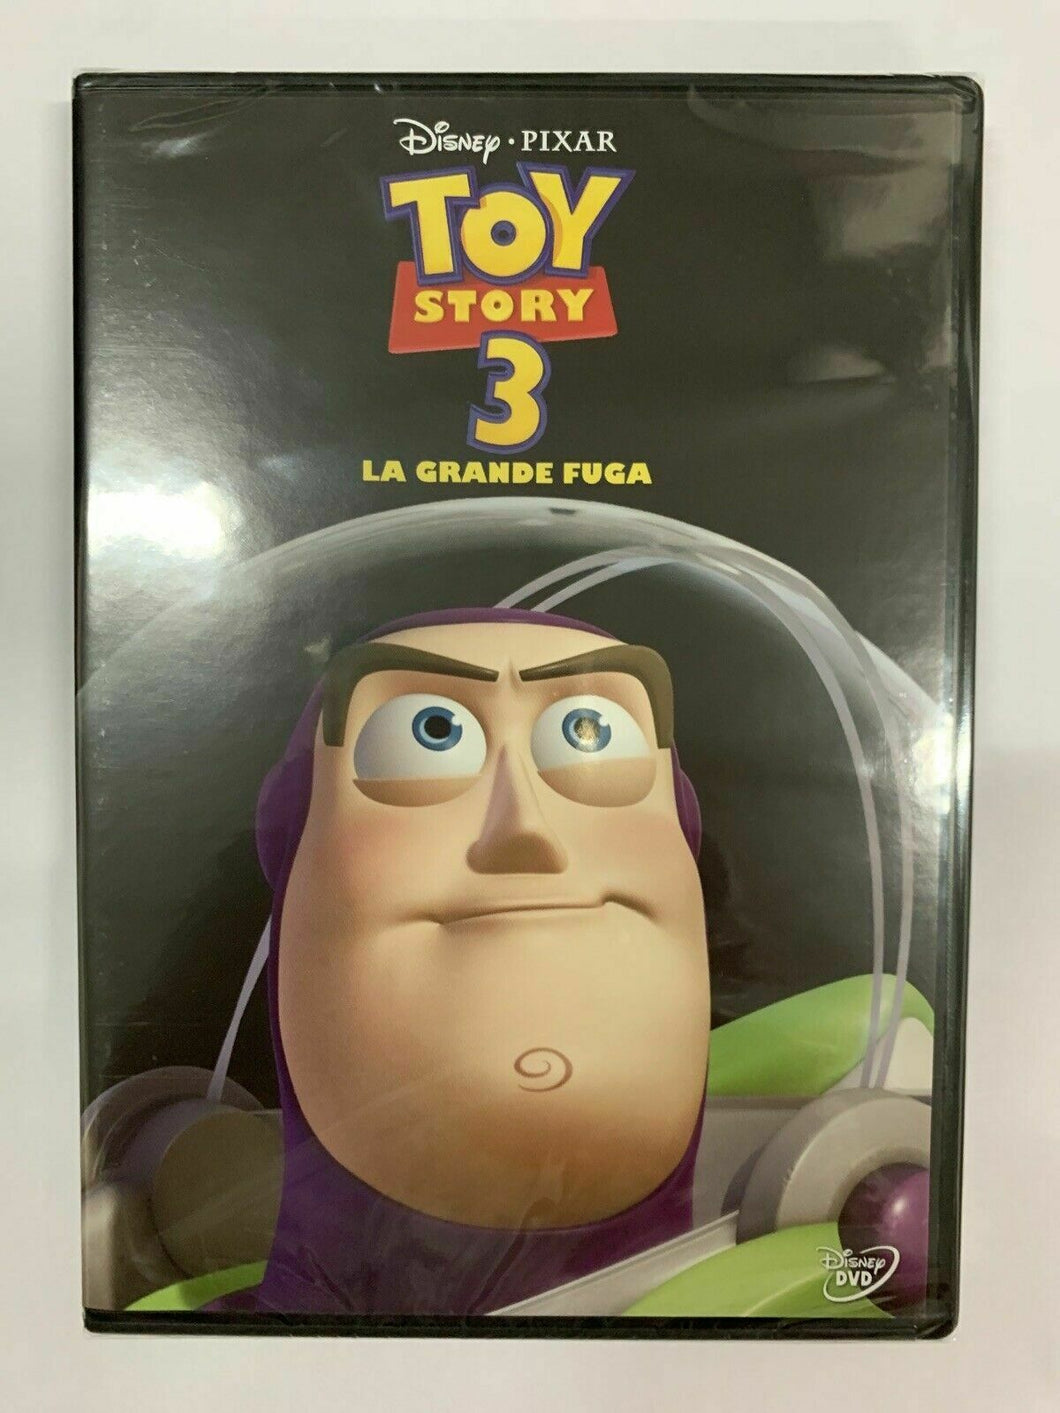 Toy Story 3 La grande fuga (2010) DVD Nuovo- Disney Pixar